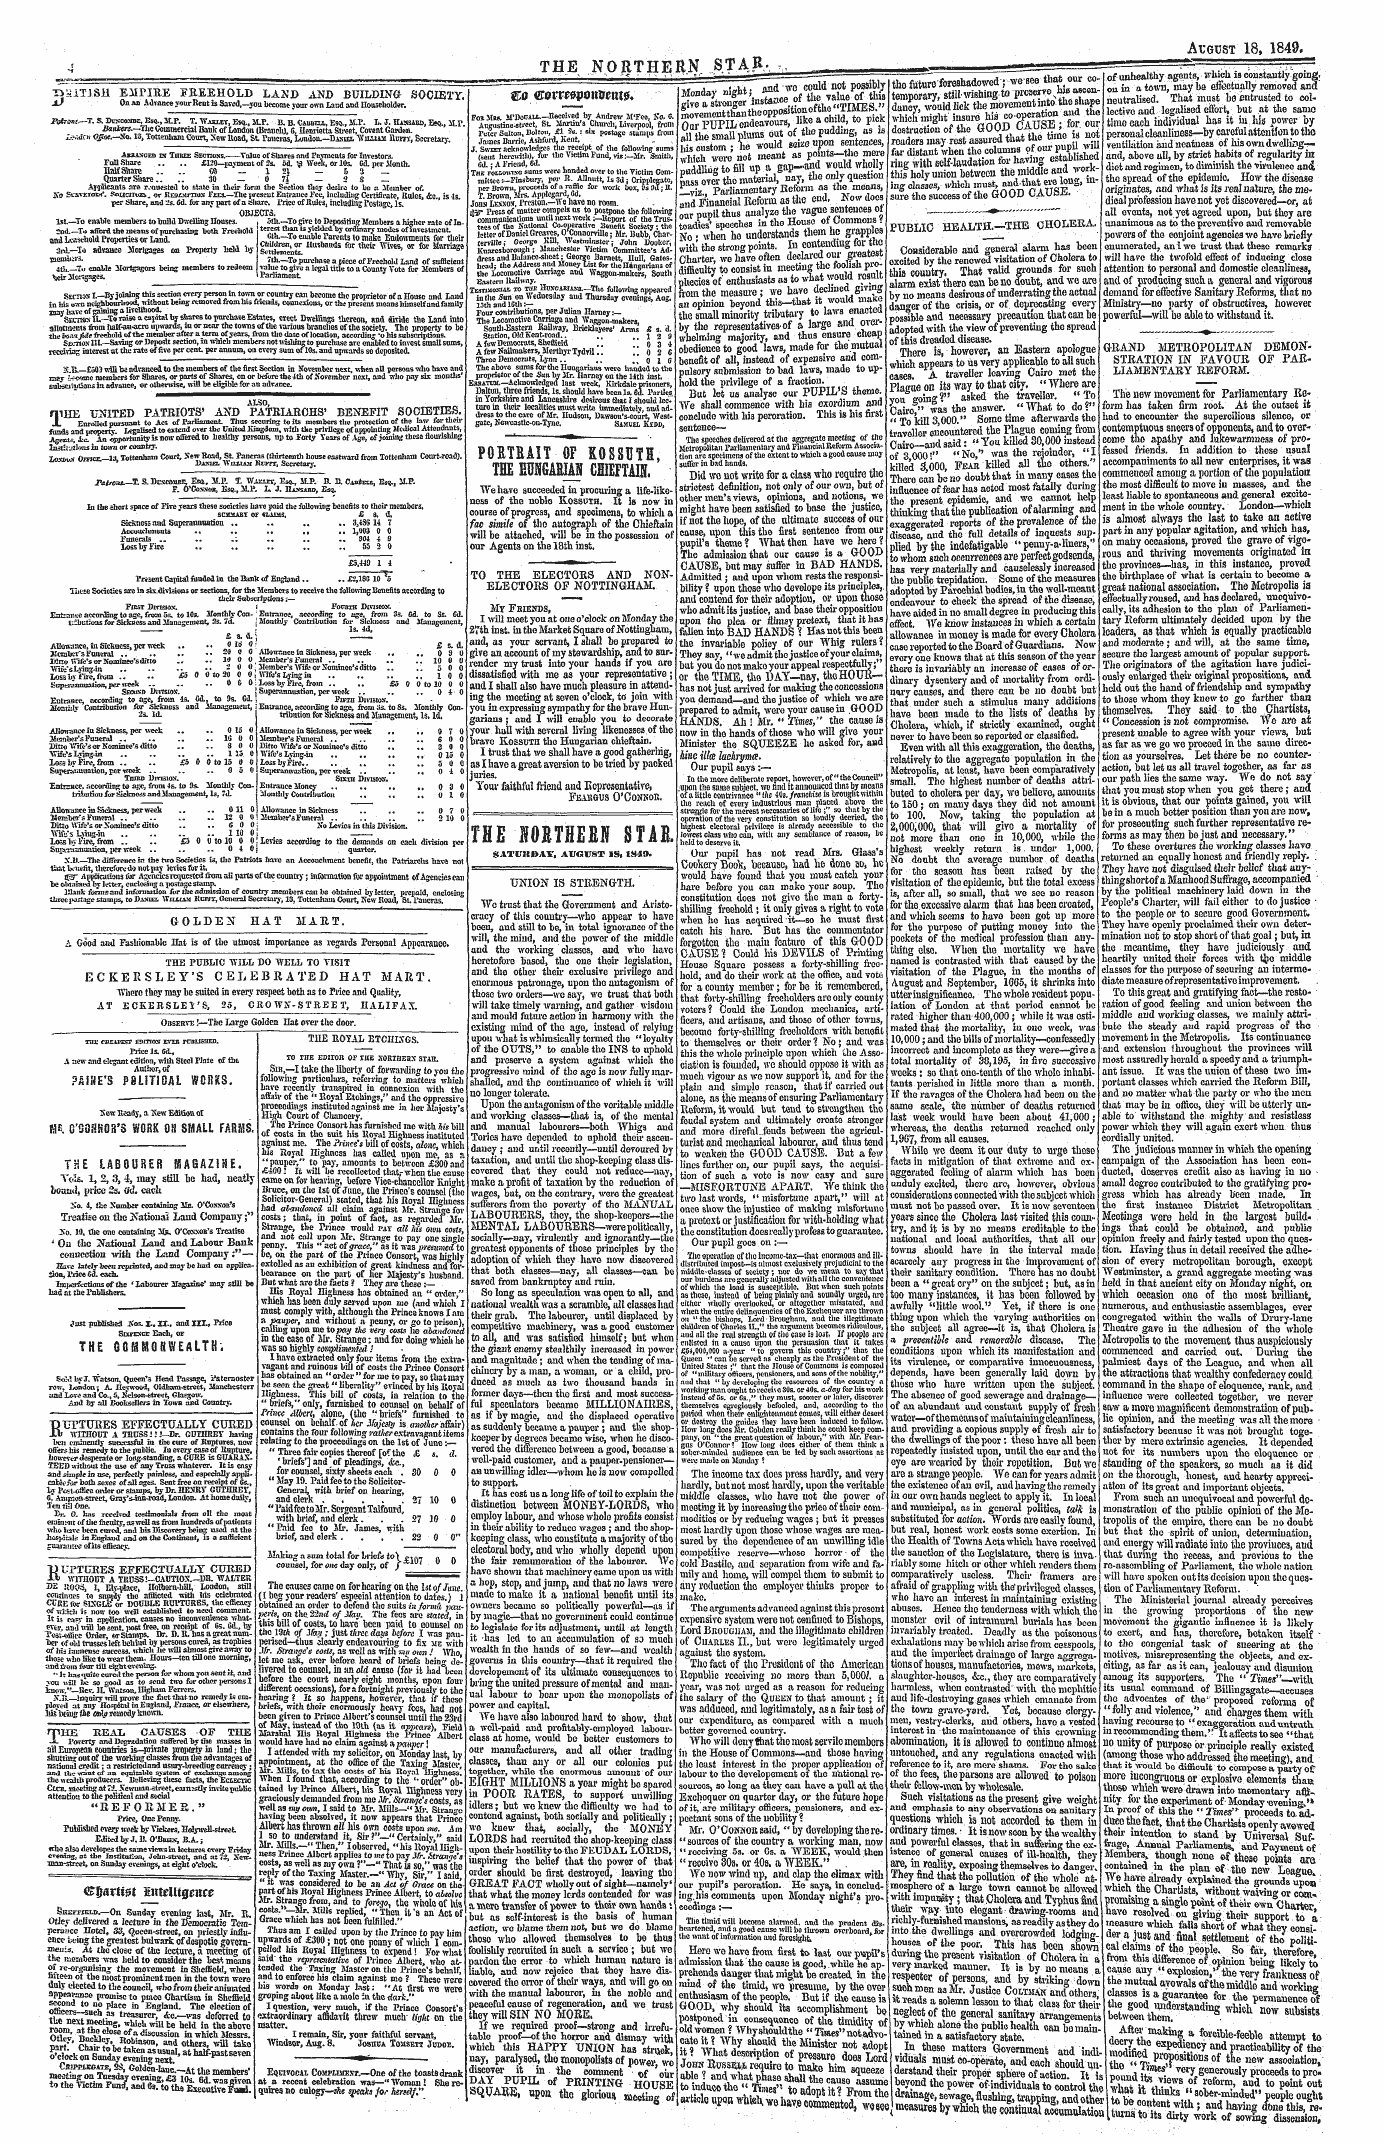 Northern Star (1837-1852): jS F Y, 3rd edition - Public Health.—The Cholera. Cohsiderablo...